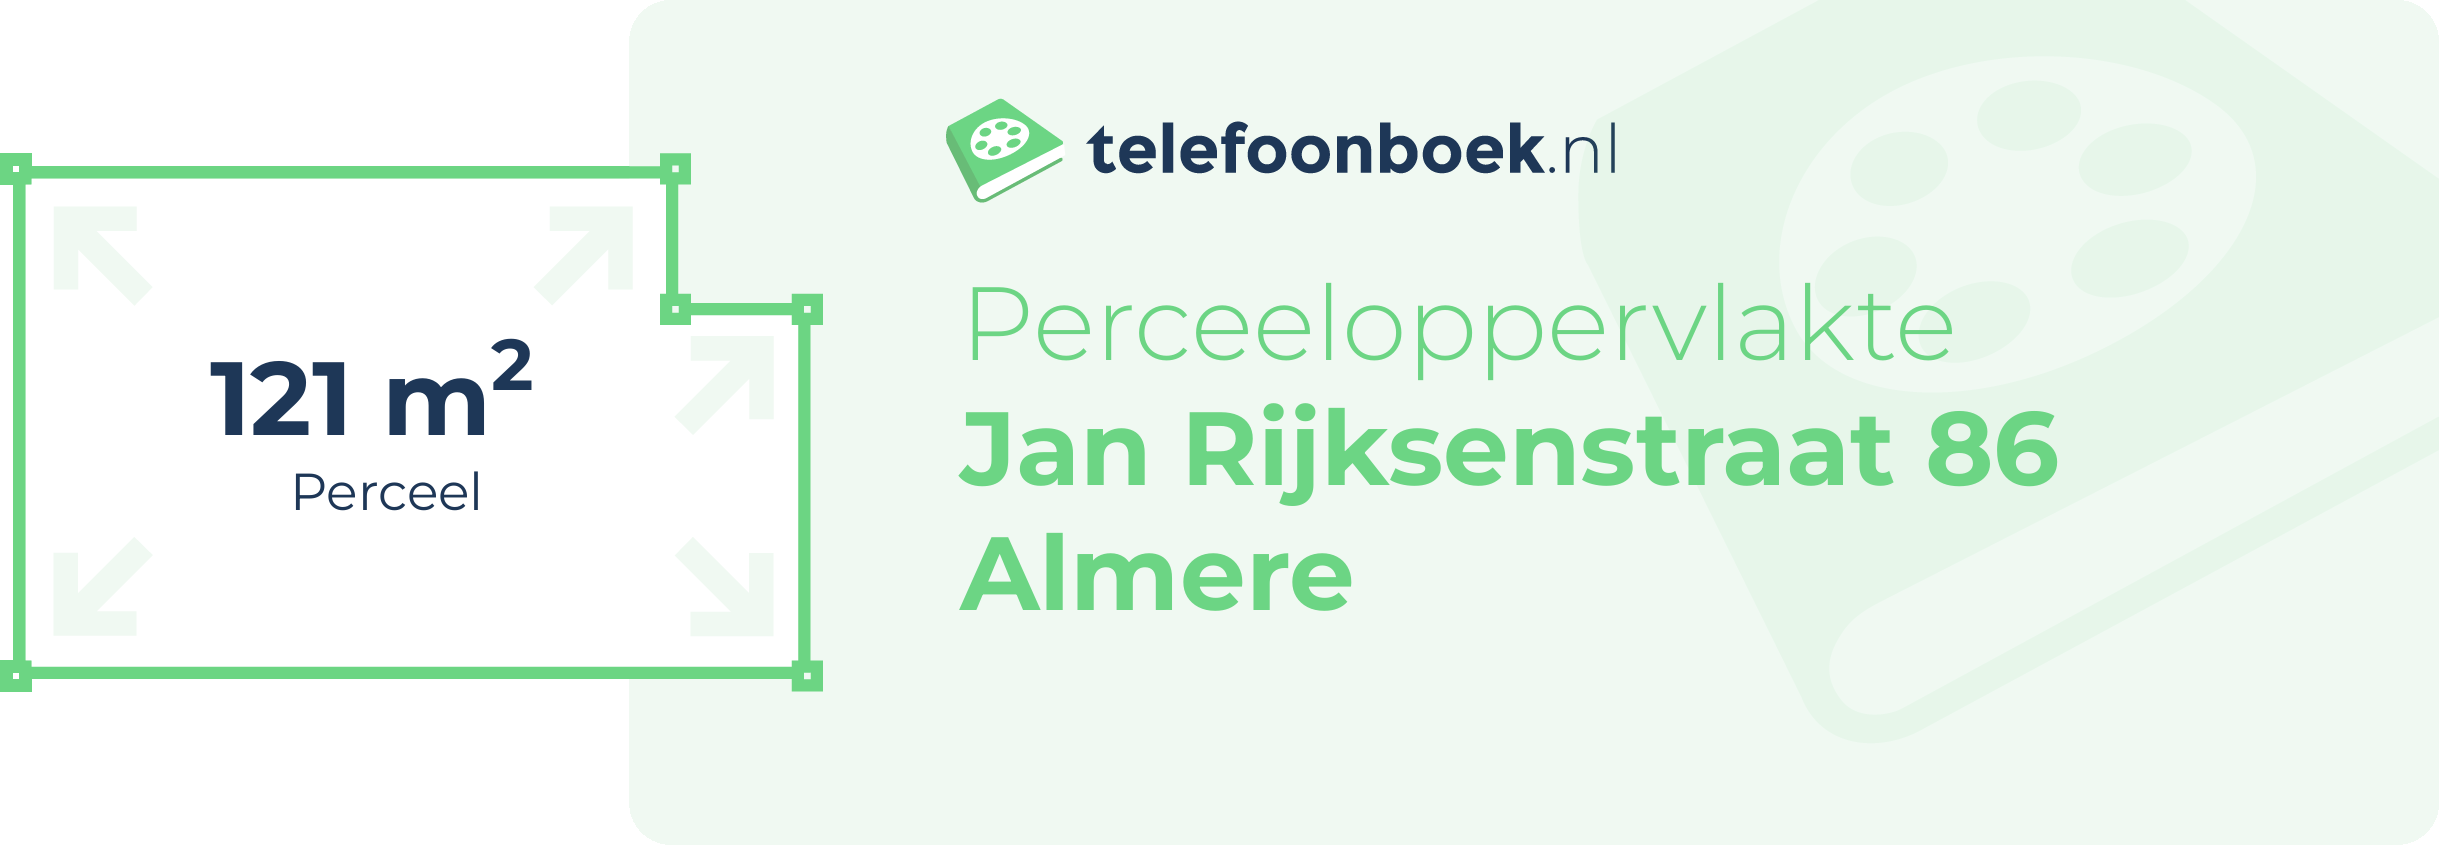 Perceeloppervlakte Jan Rijksenstraat 86 Almere